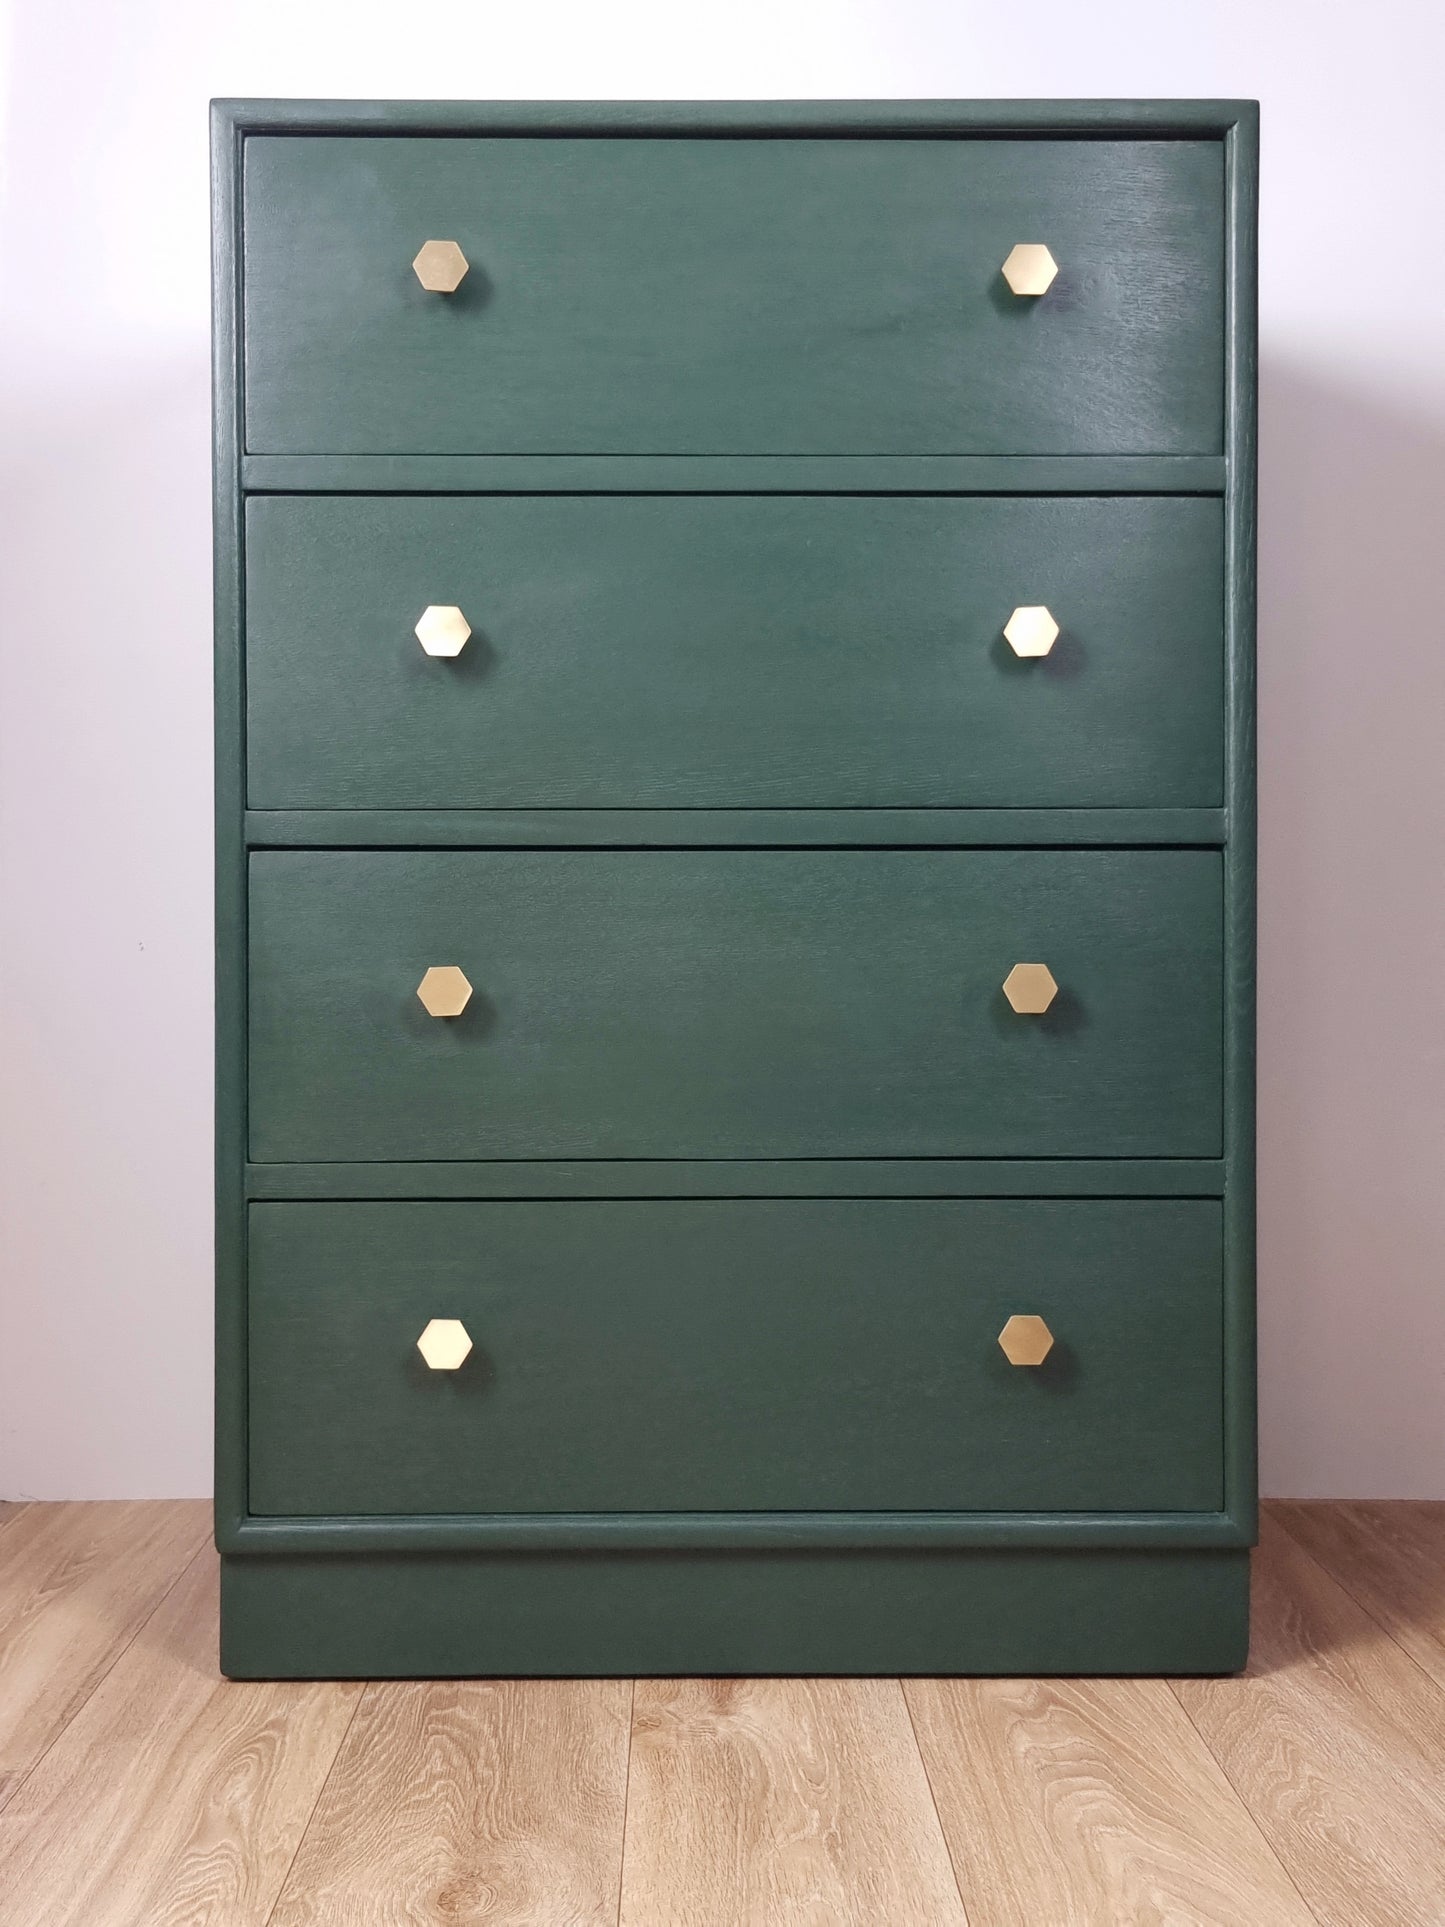 Dark green oak chest of drawers